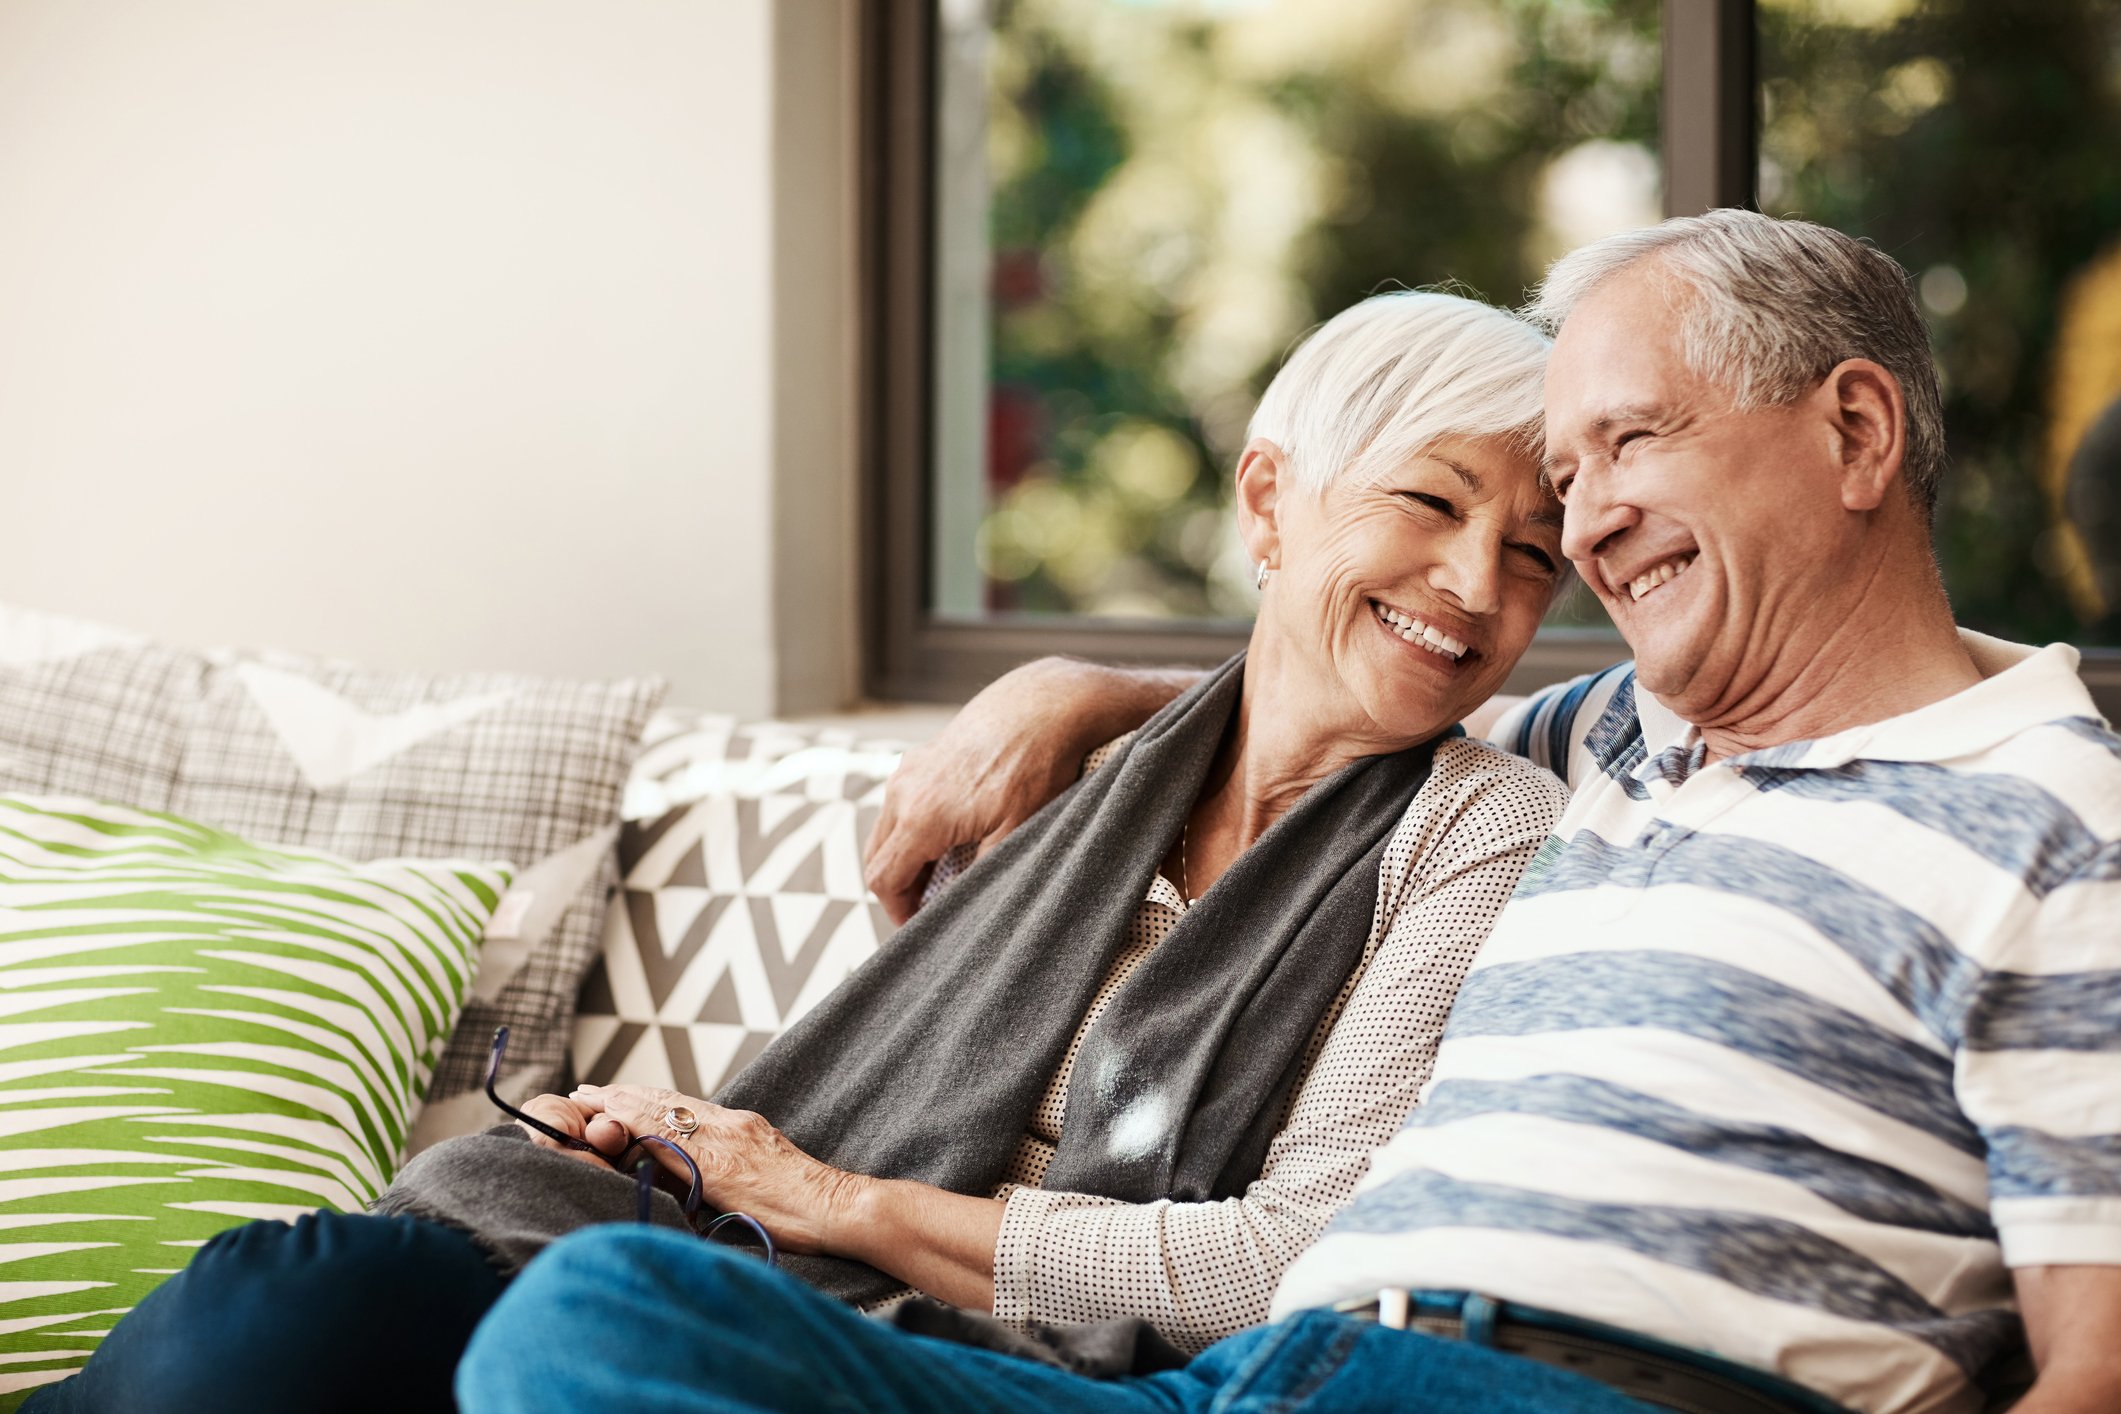 4 Retirement Lifestyle Predictions